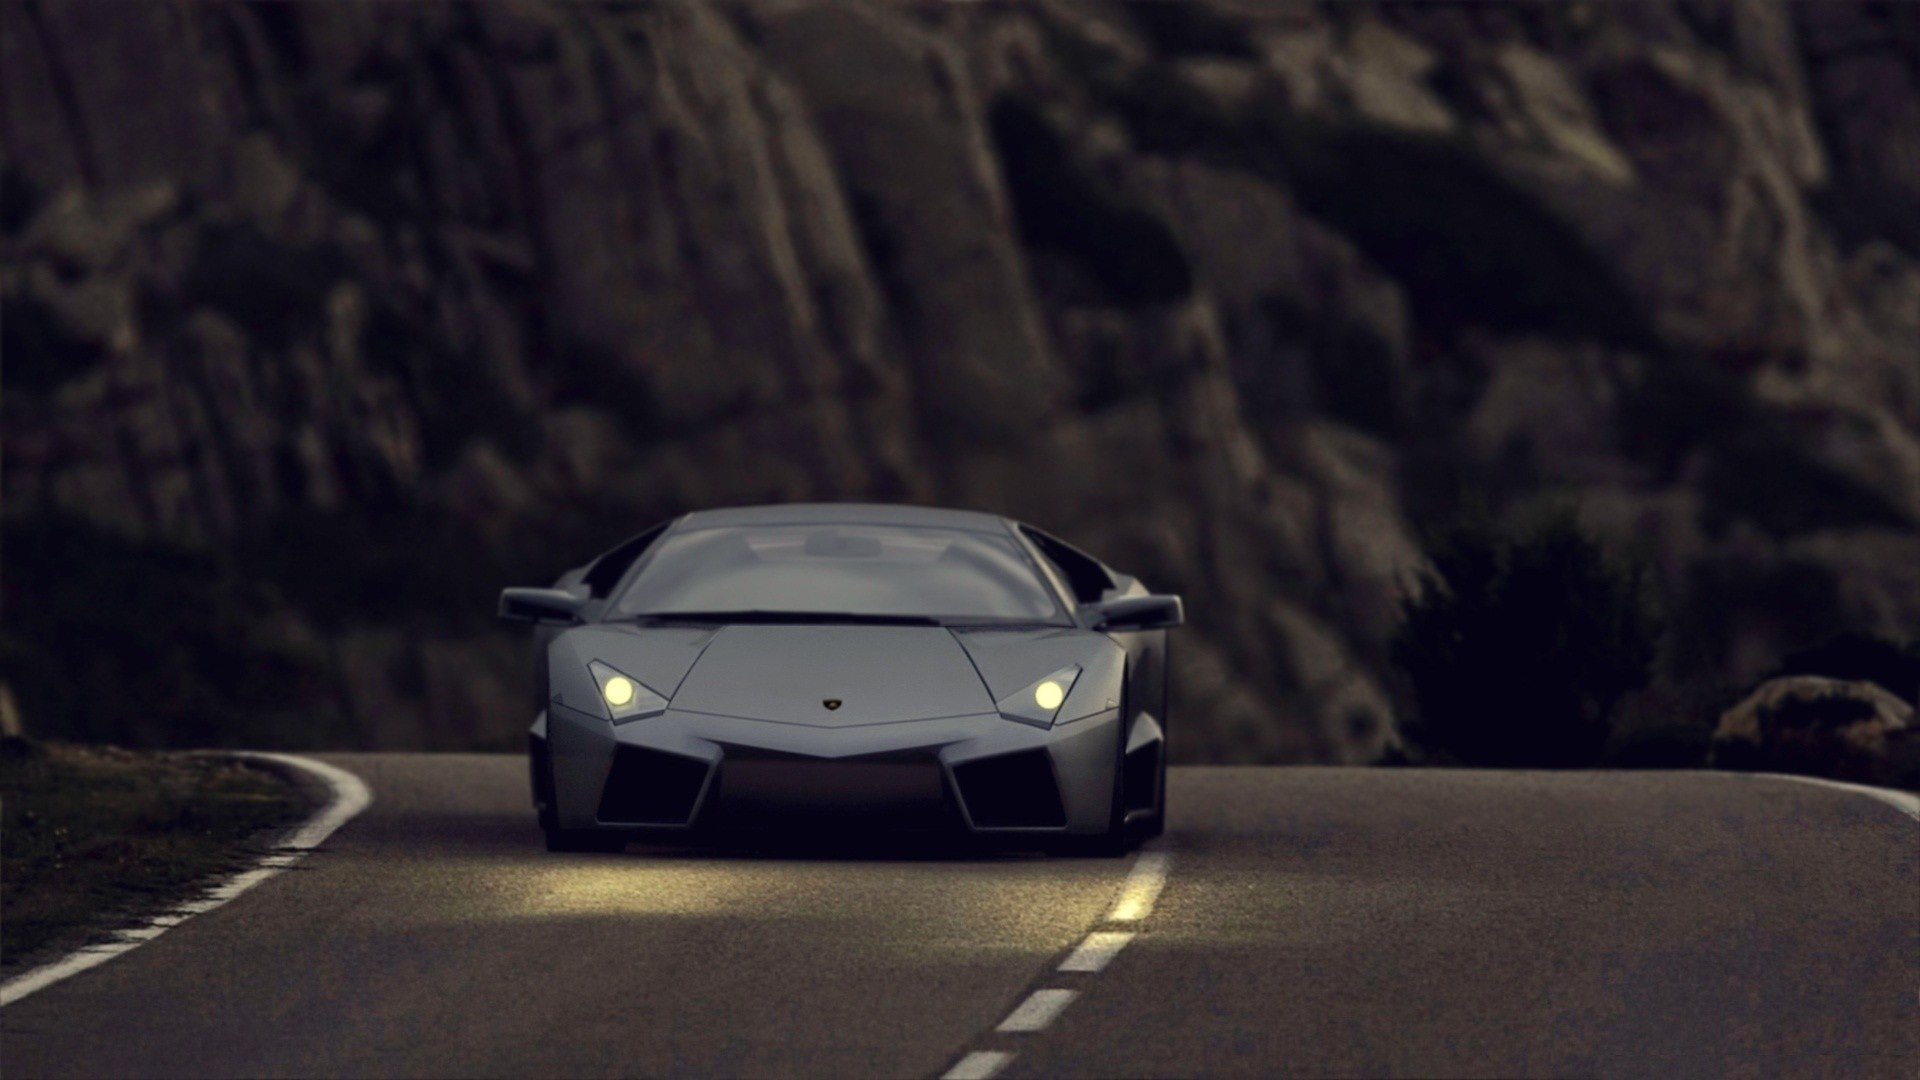 Lamborghini Dark wallpapers HD | PixelsTalk.Net